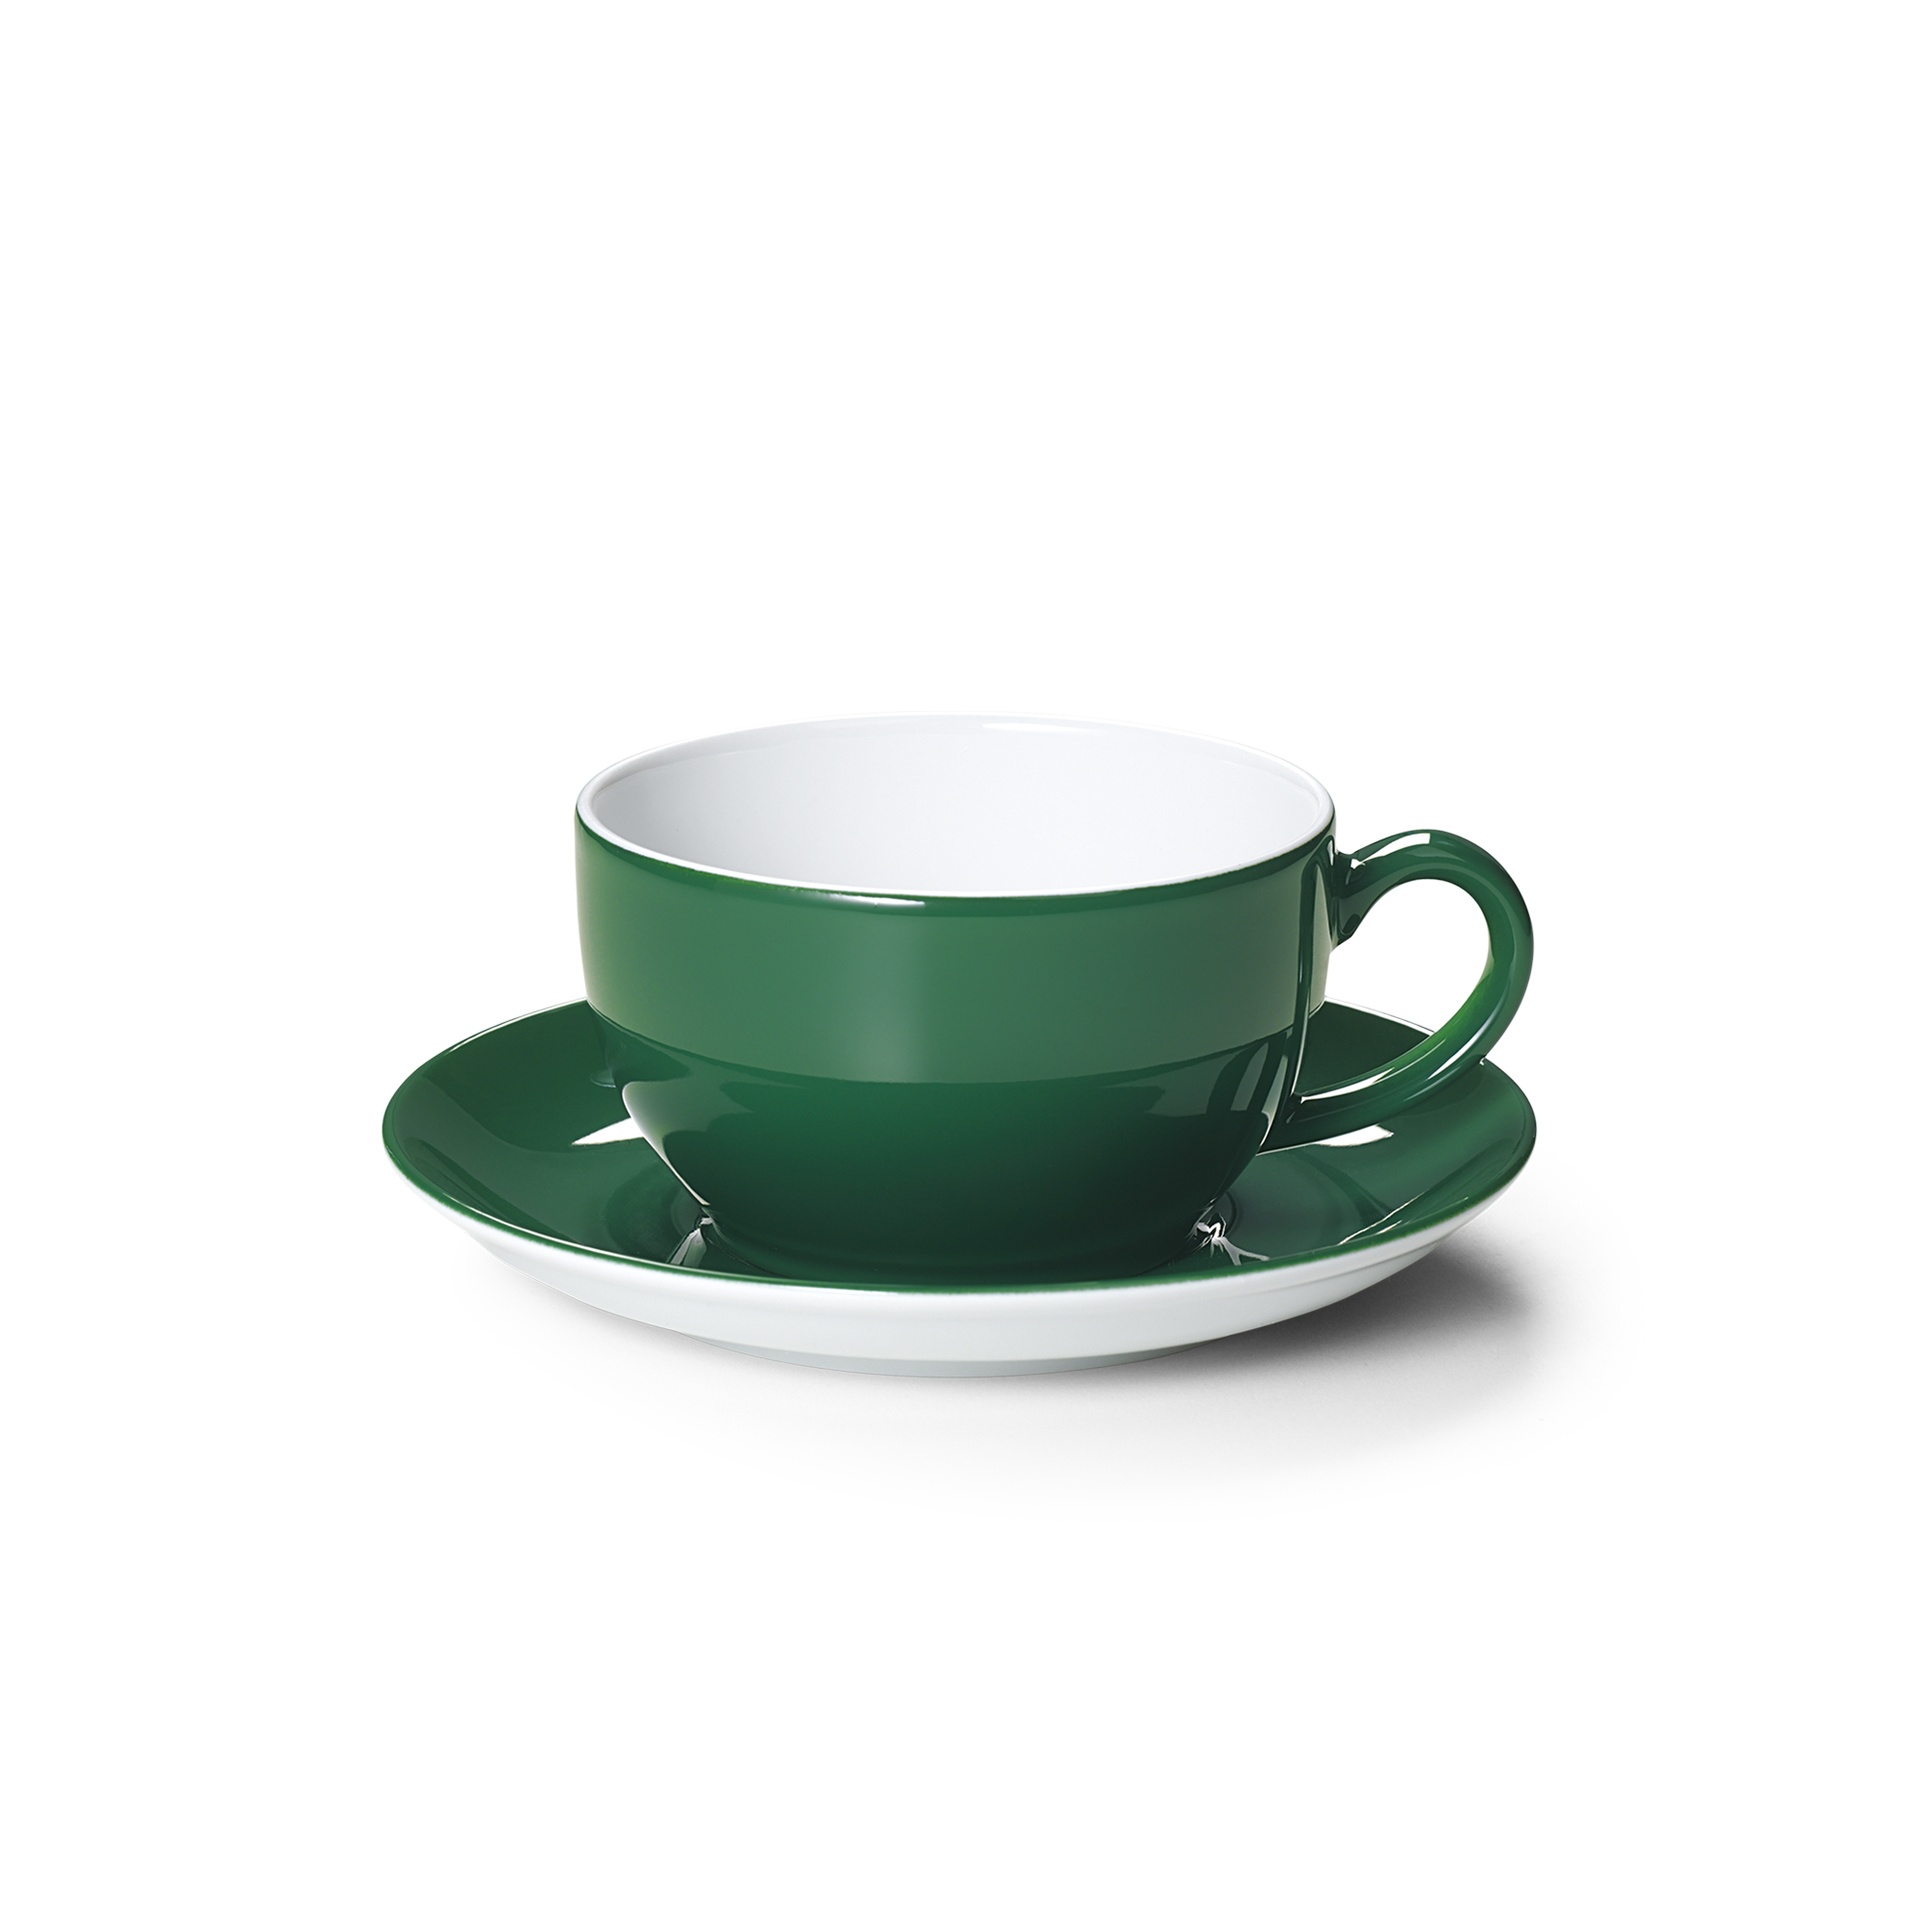 Solid Color fir green coffee mug